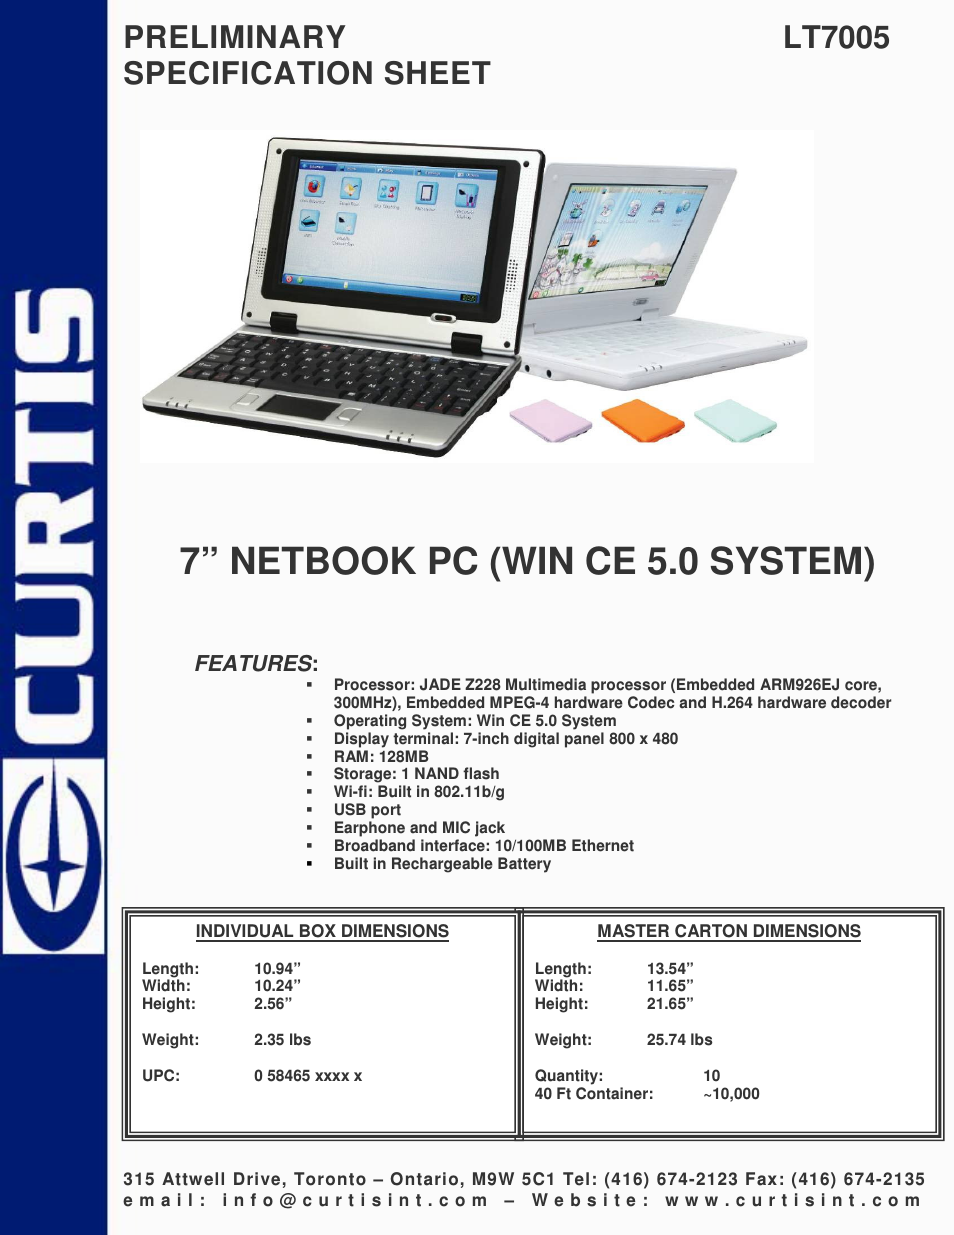 NETBOOK PC LT7005